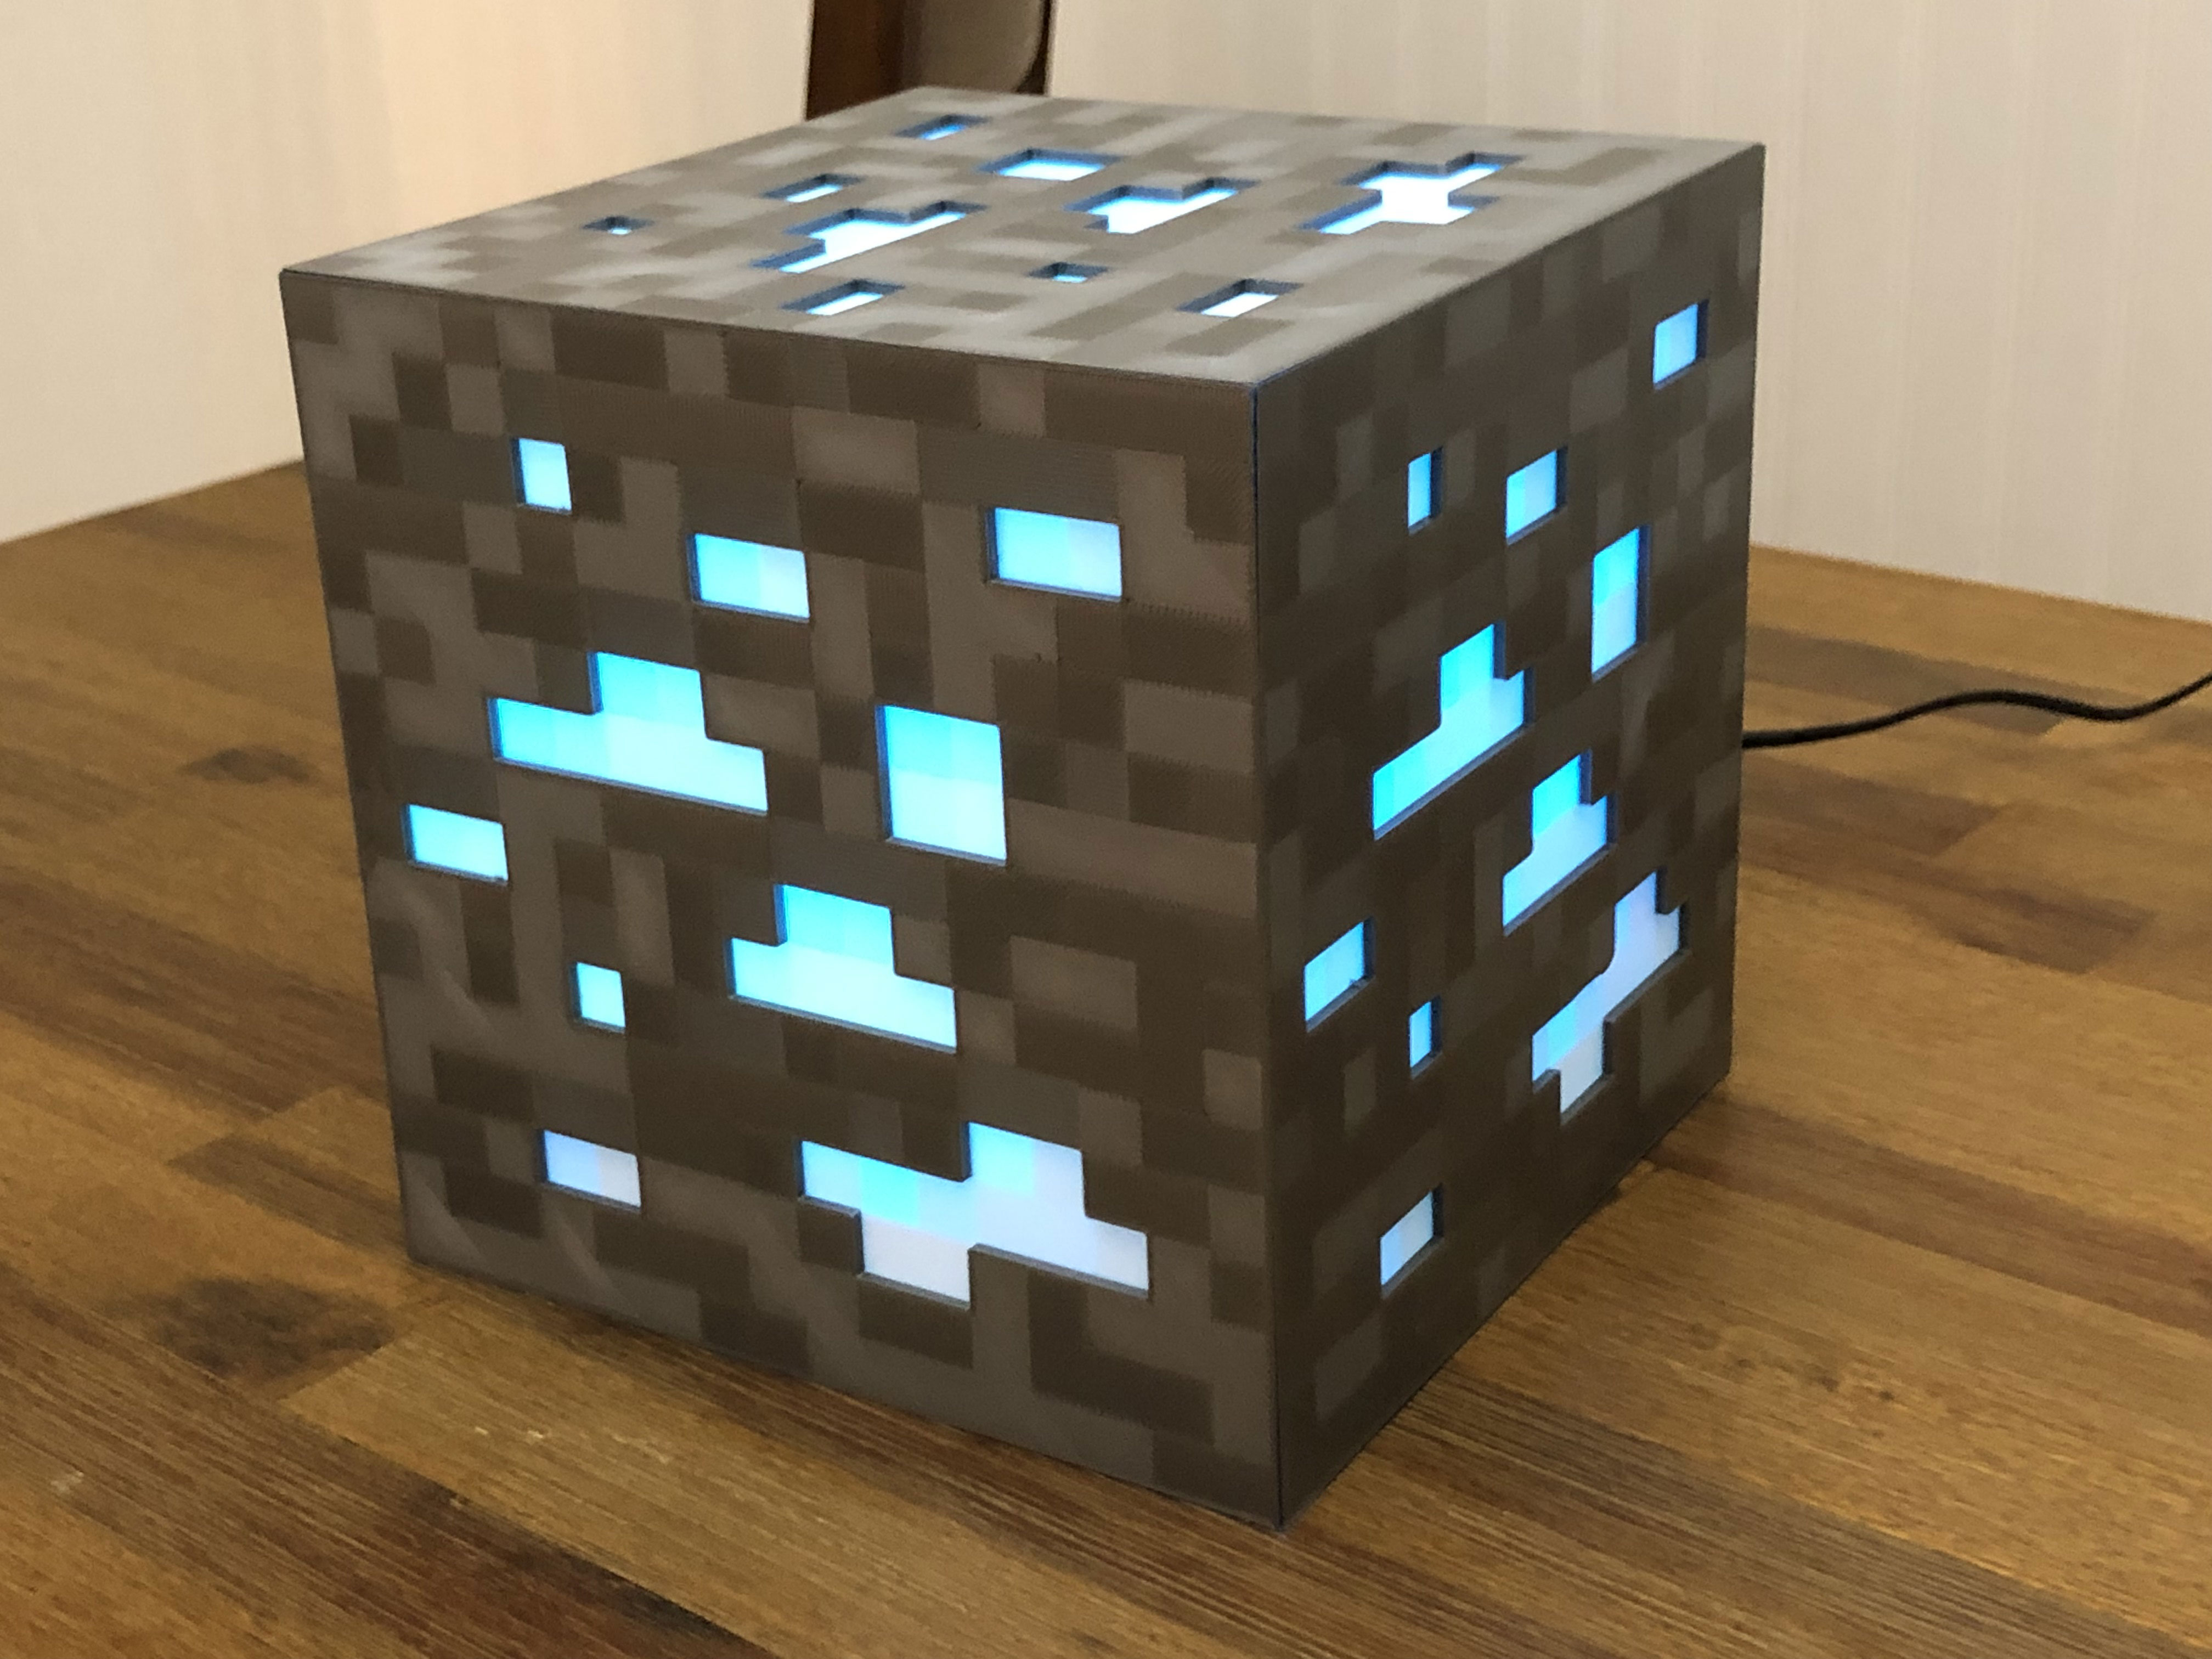 "8-Bit" Minecraft Diamond Ore Lamp - Siri Enabled!